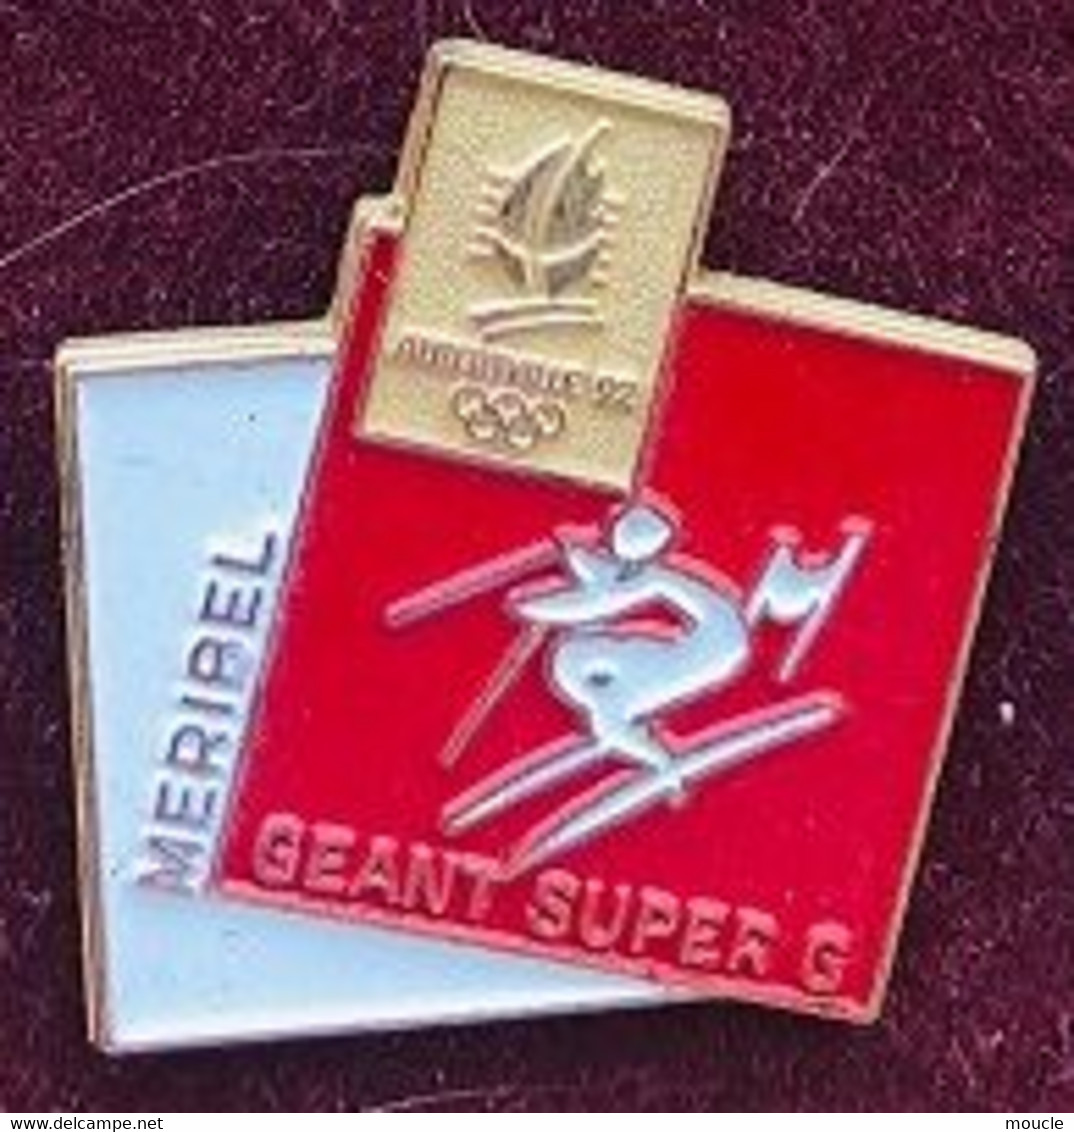 ALBERTVILLE 1992 / 92 - FRANCE - SITE MERIBEL - SKI - SLALOM GEANT - SUPER G - JEUX OLYMPIQUES - SAVOIE - ANNEAUX - (JO) - Giochi Olimpici